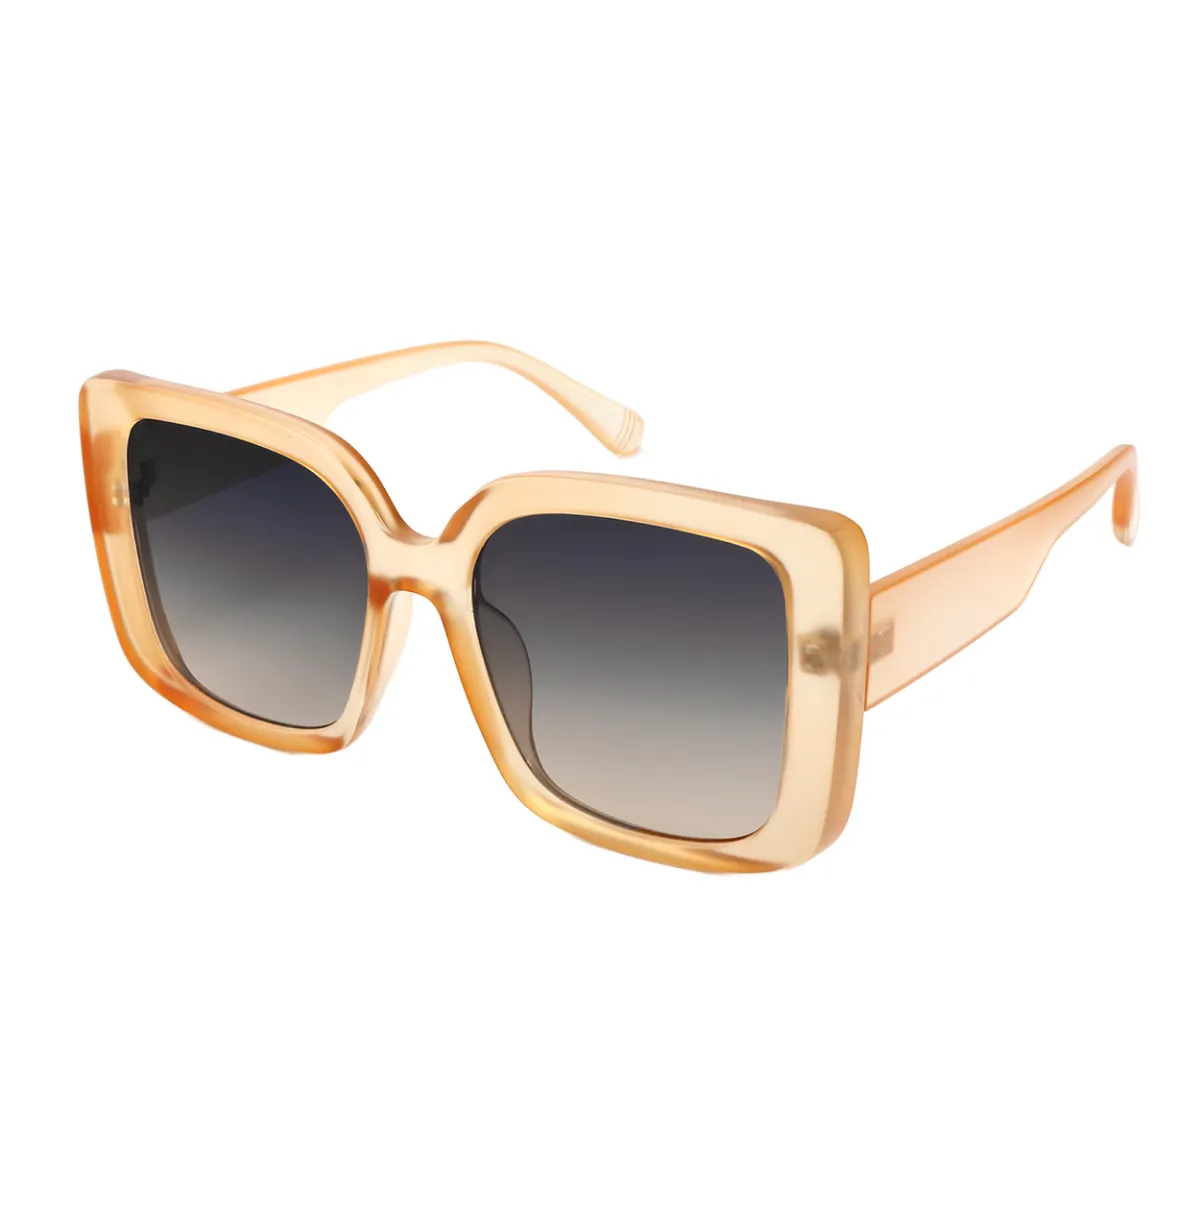 Aspasia - Square Frosted Orange Transpartent Sunglasses for Women